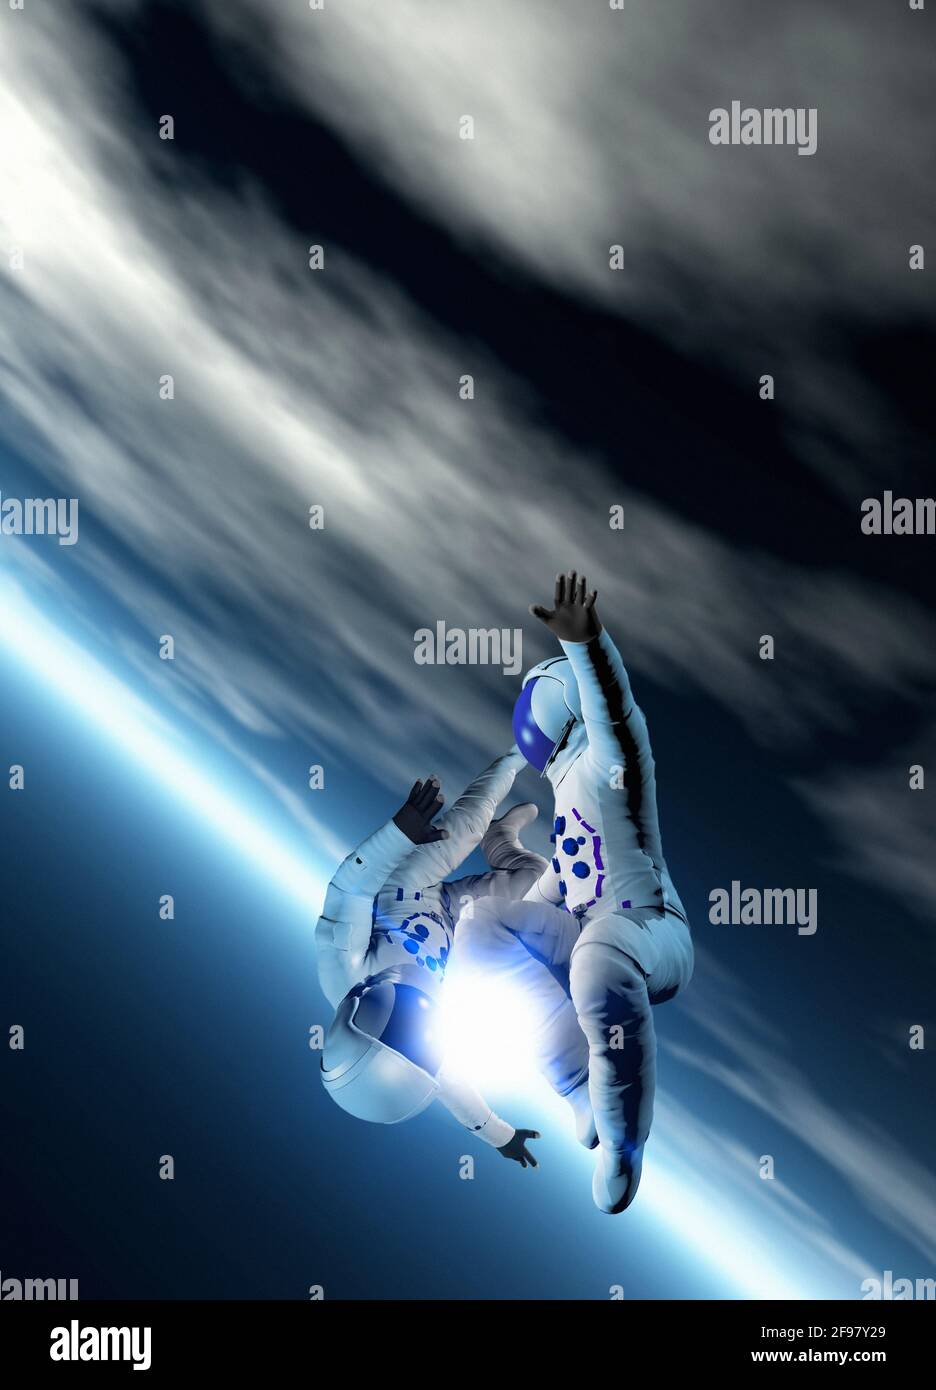 Astronauts in space, illustration Stock Photo